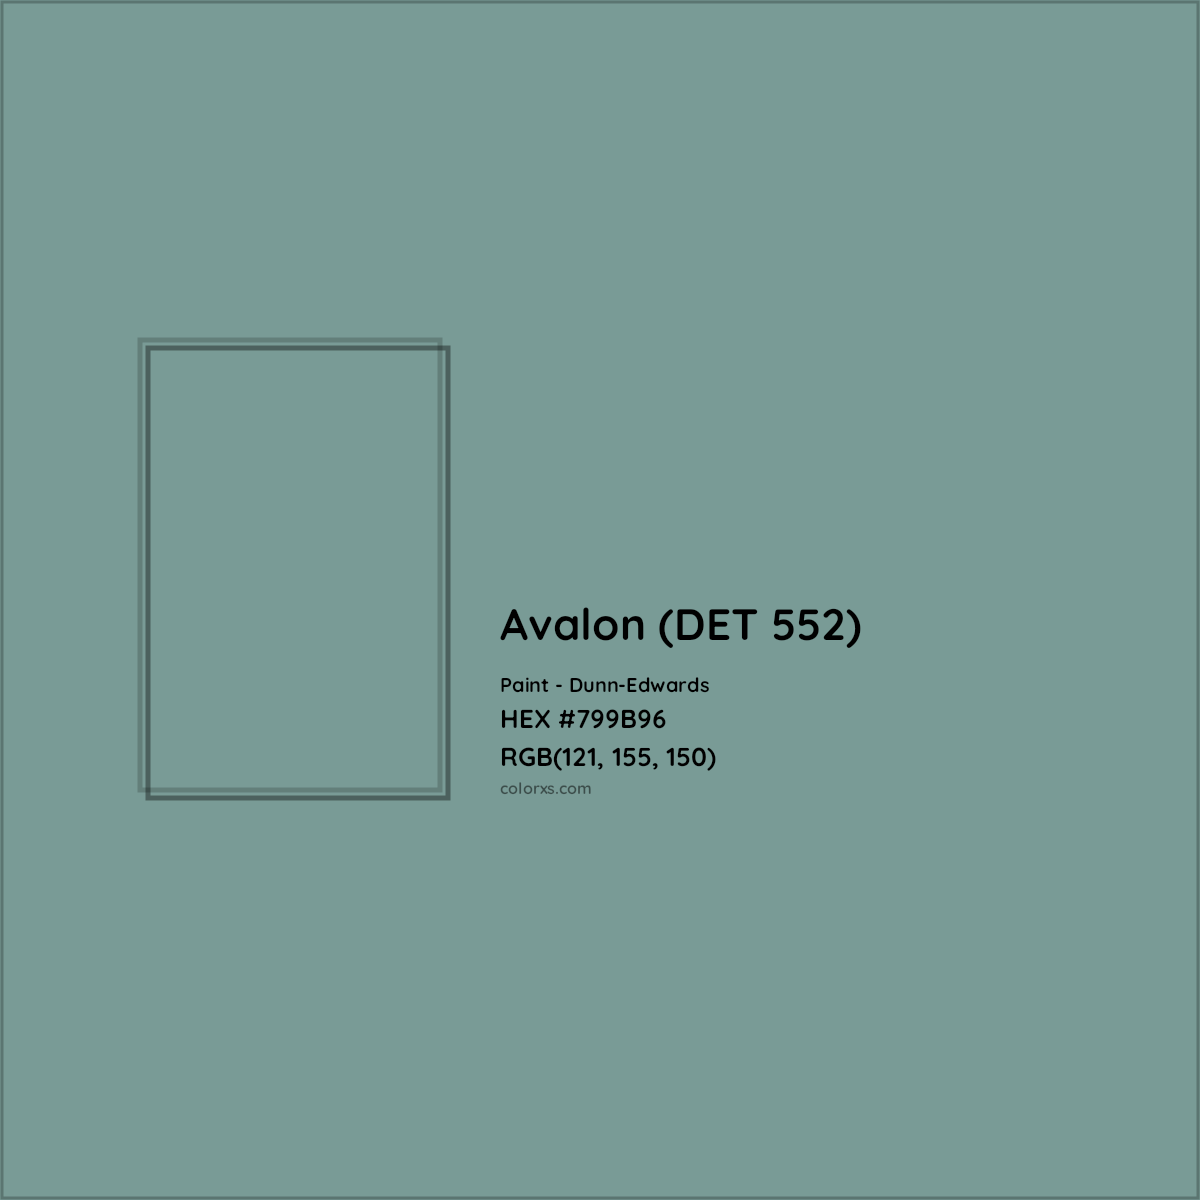 HEX #799B96 Avalon (DET 552) Paint Dunn-Edwards - Color Code